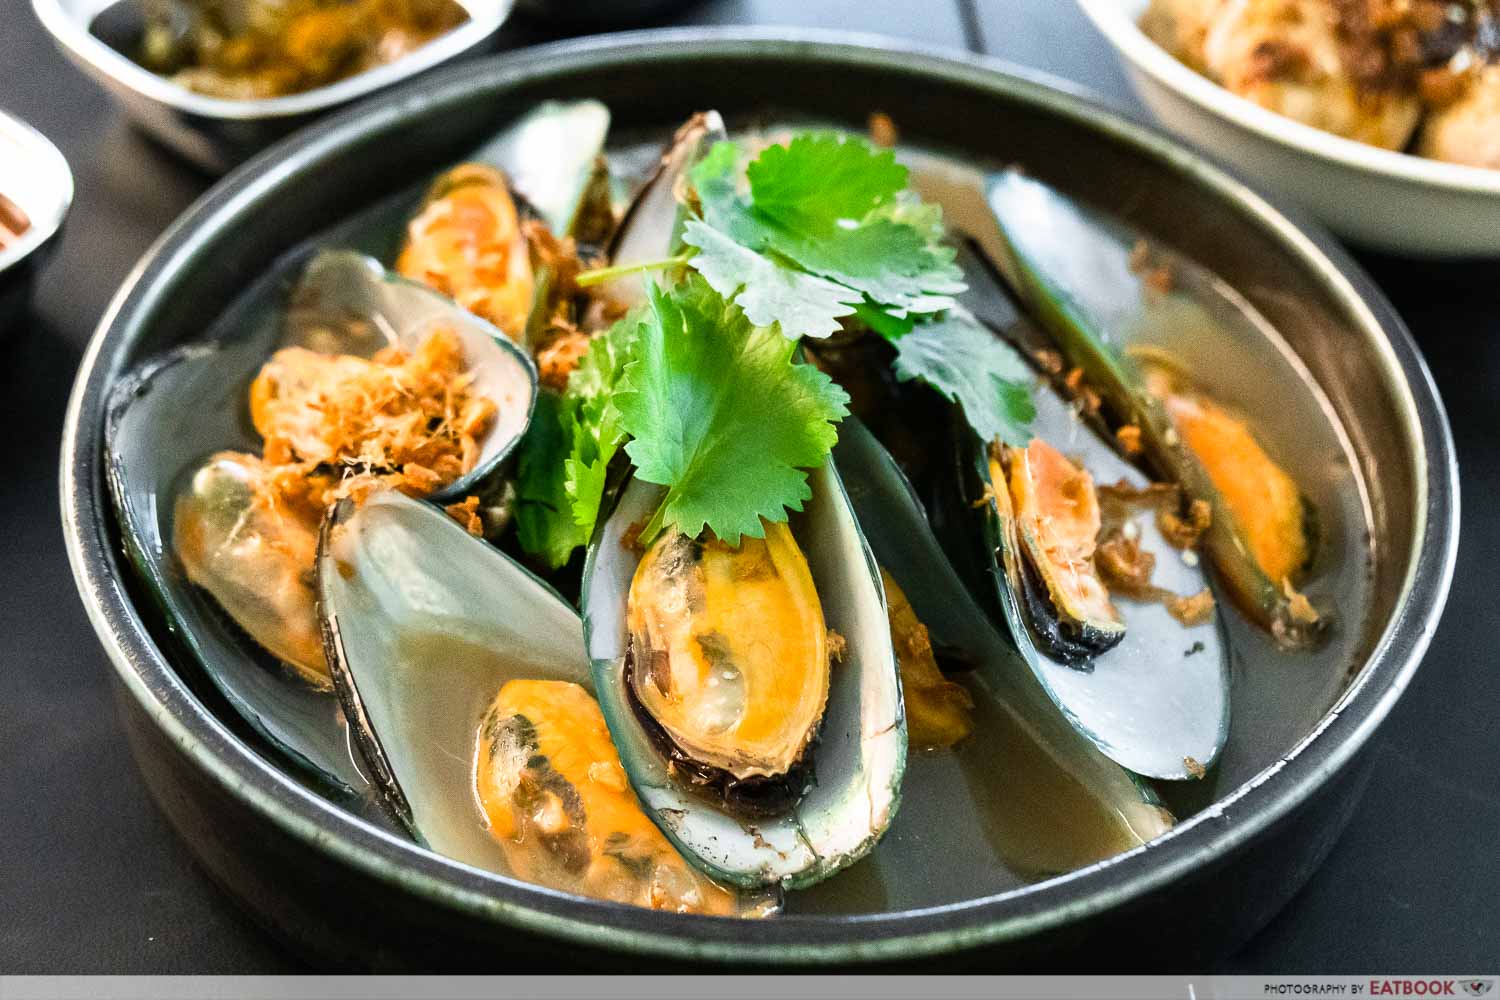 wanton seng's eating house - ah hua kelong mussels